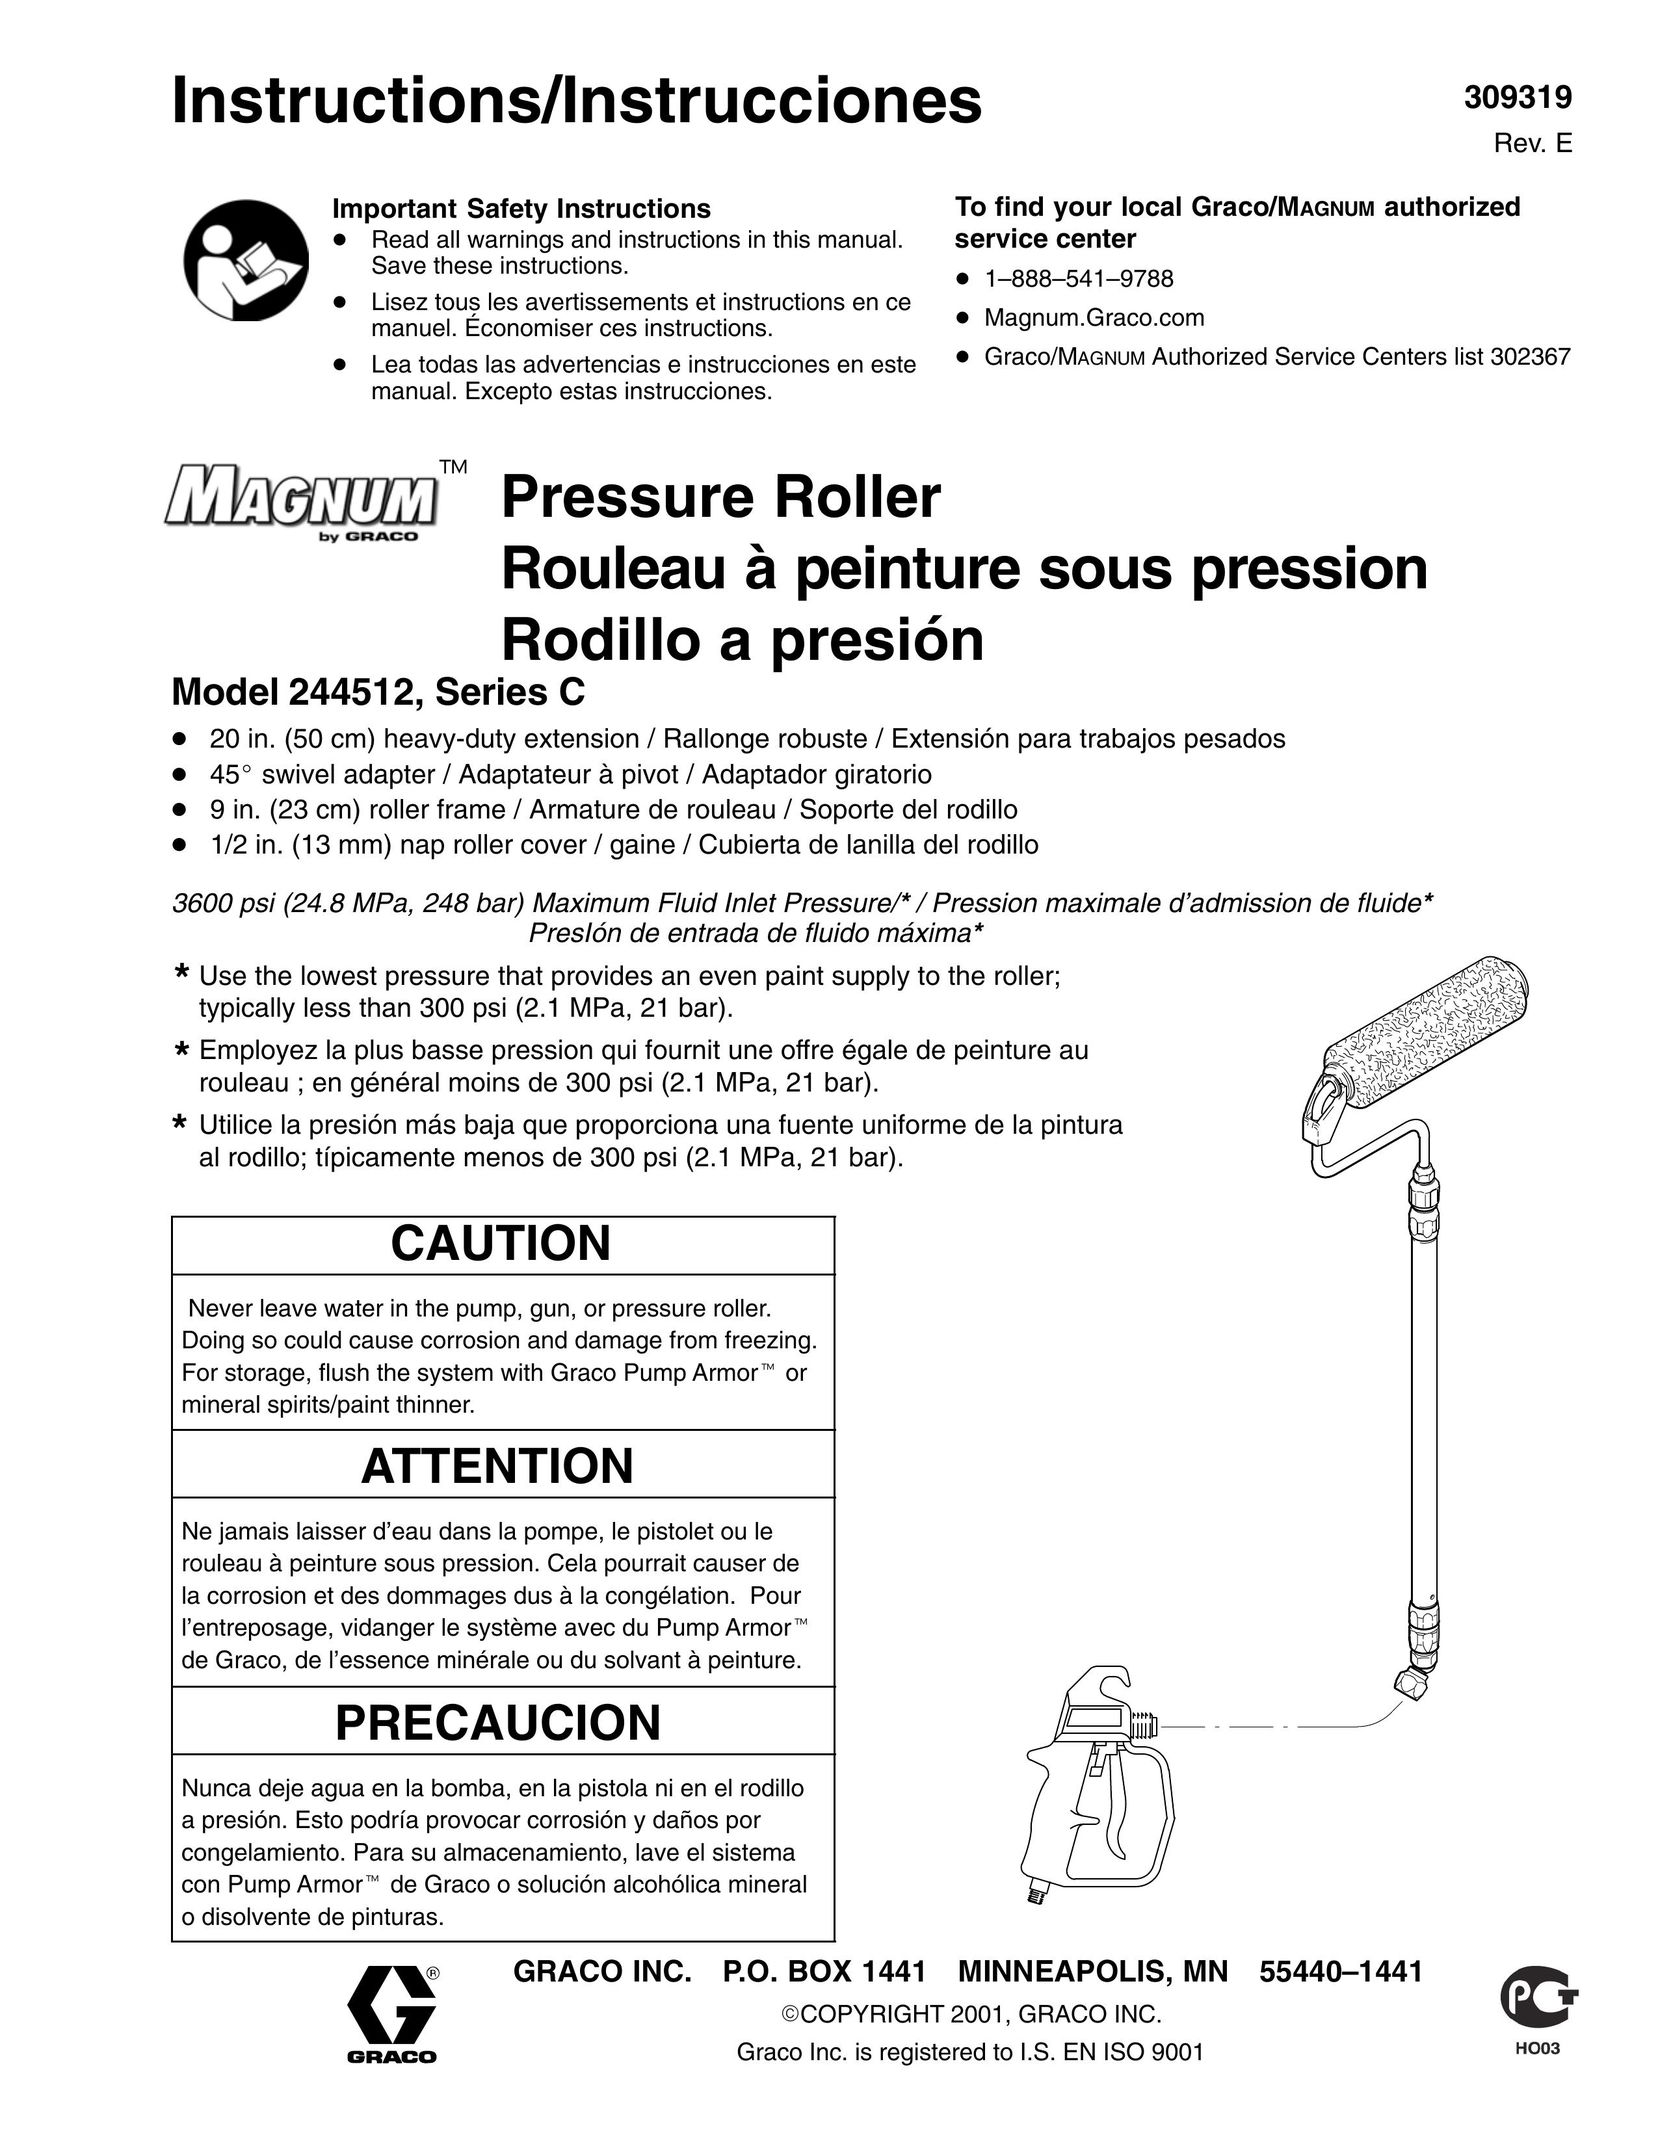 Graco Inc. 244512 Power Roller User Manual